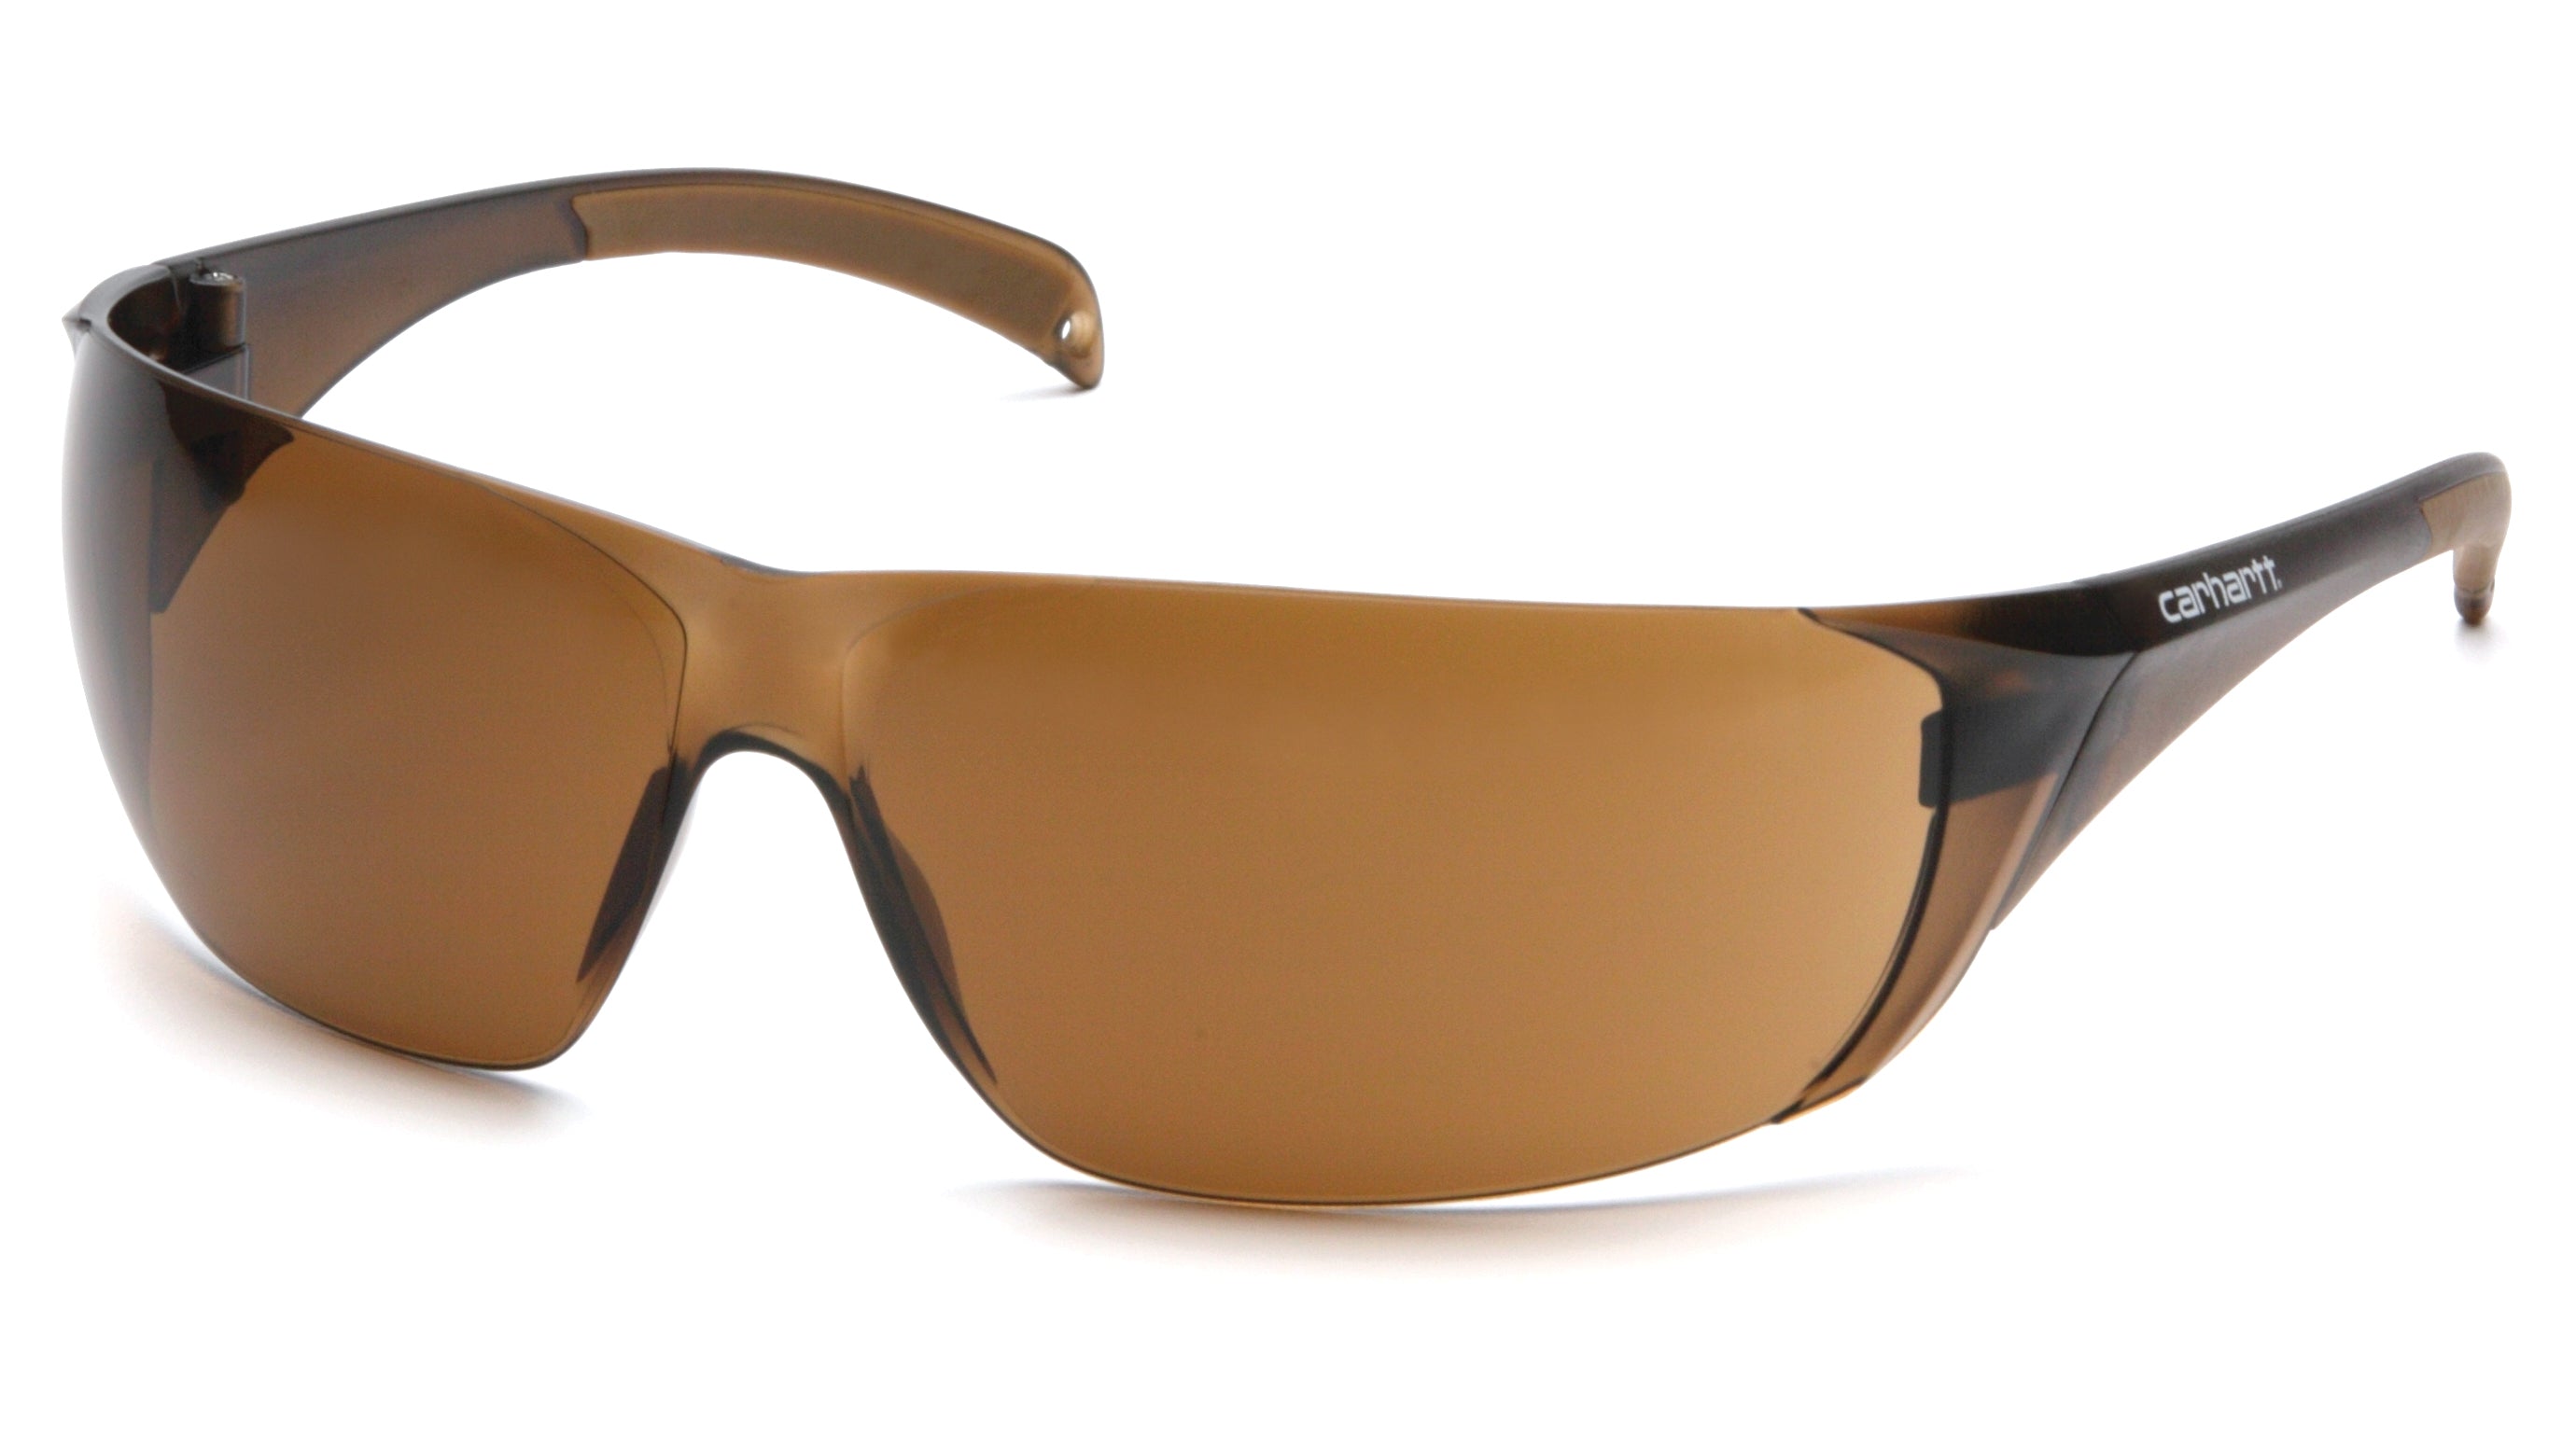 Carhartt Billings Sandstone Bronze Brown Safety Glasses Glasses Z87+